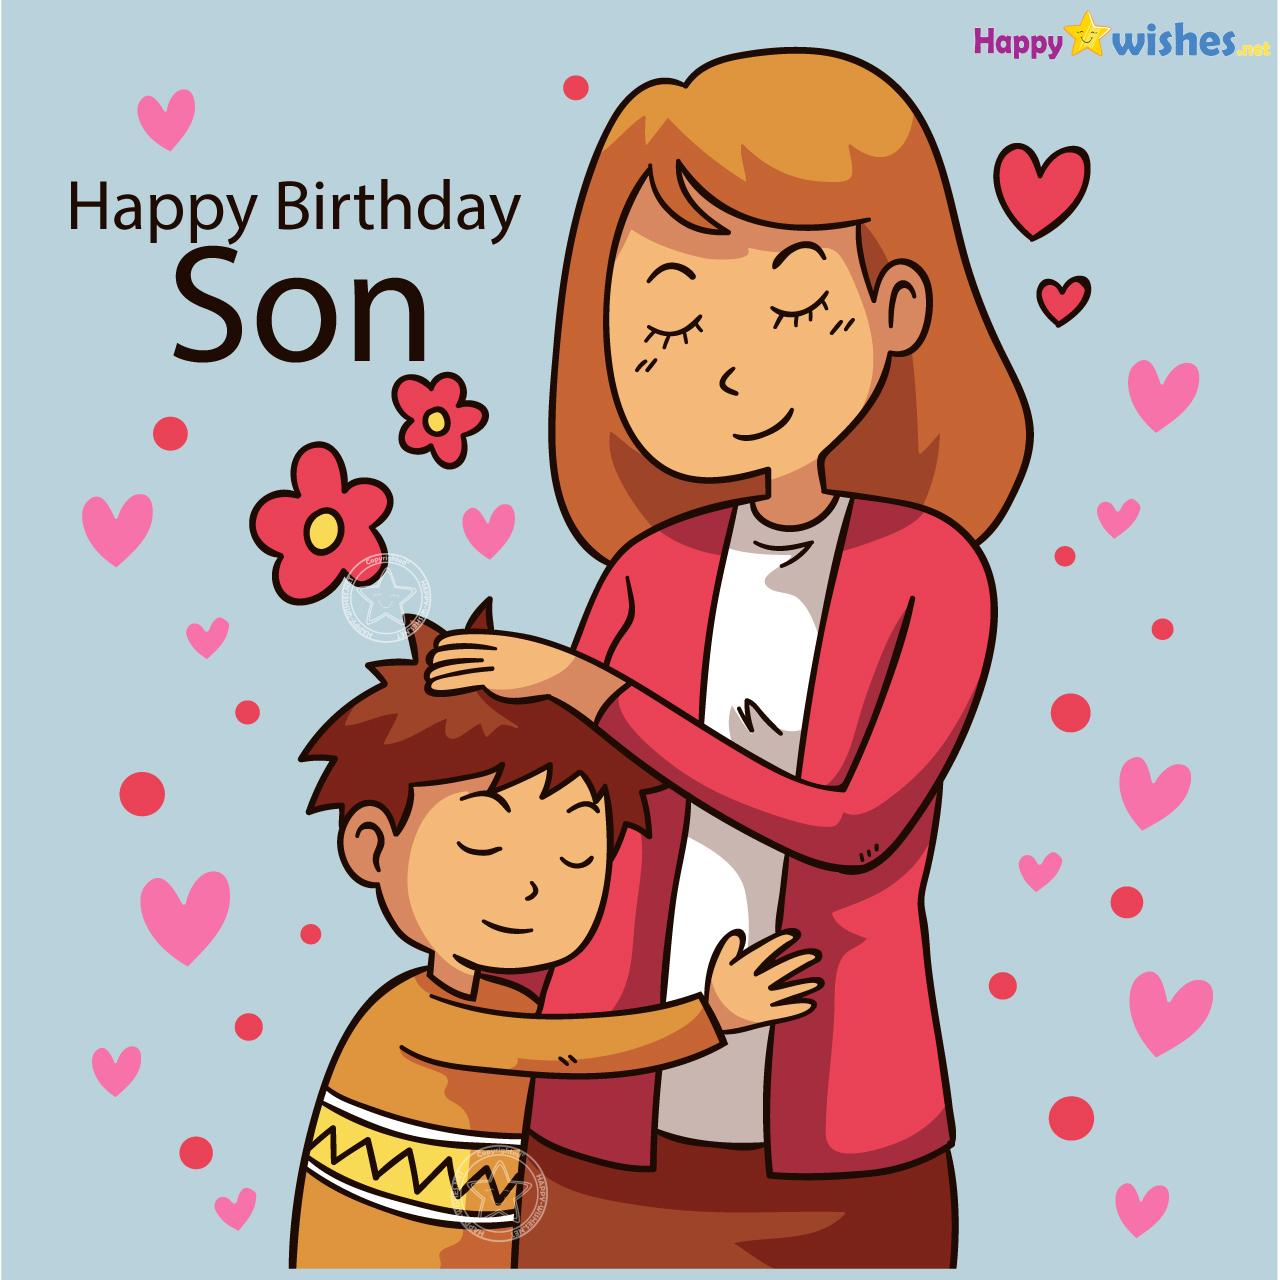 Happy Birthday son